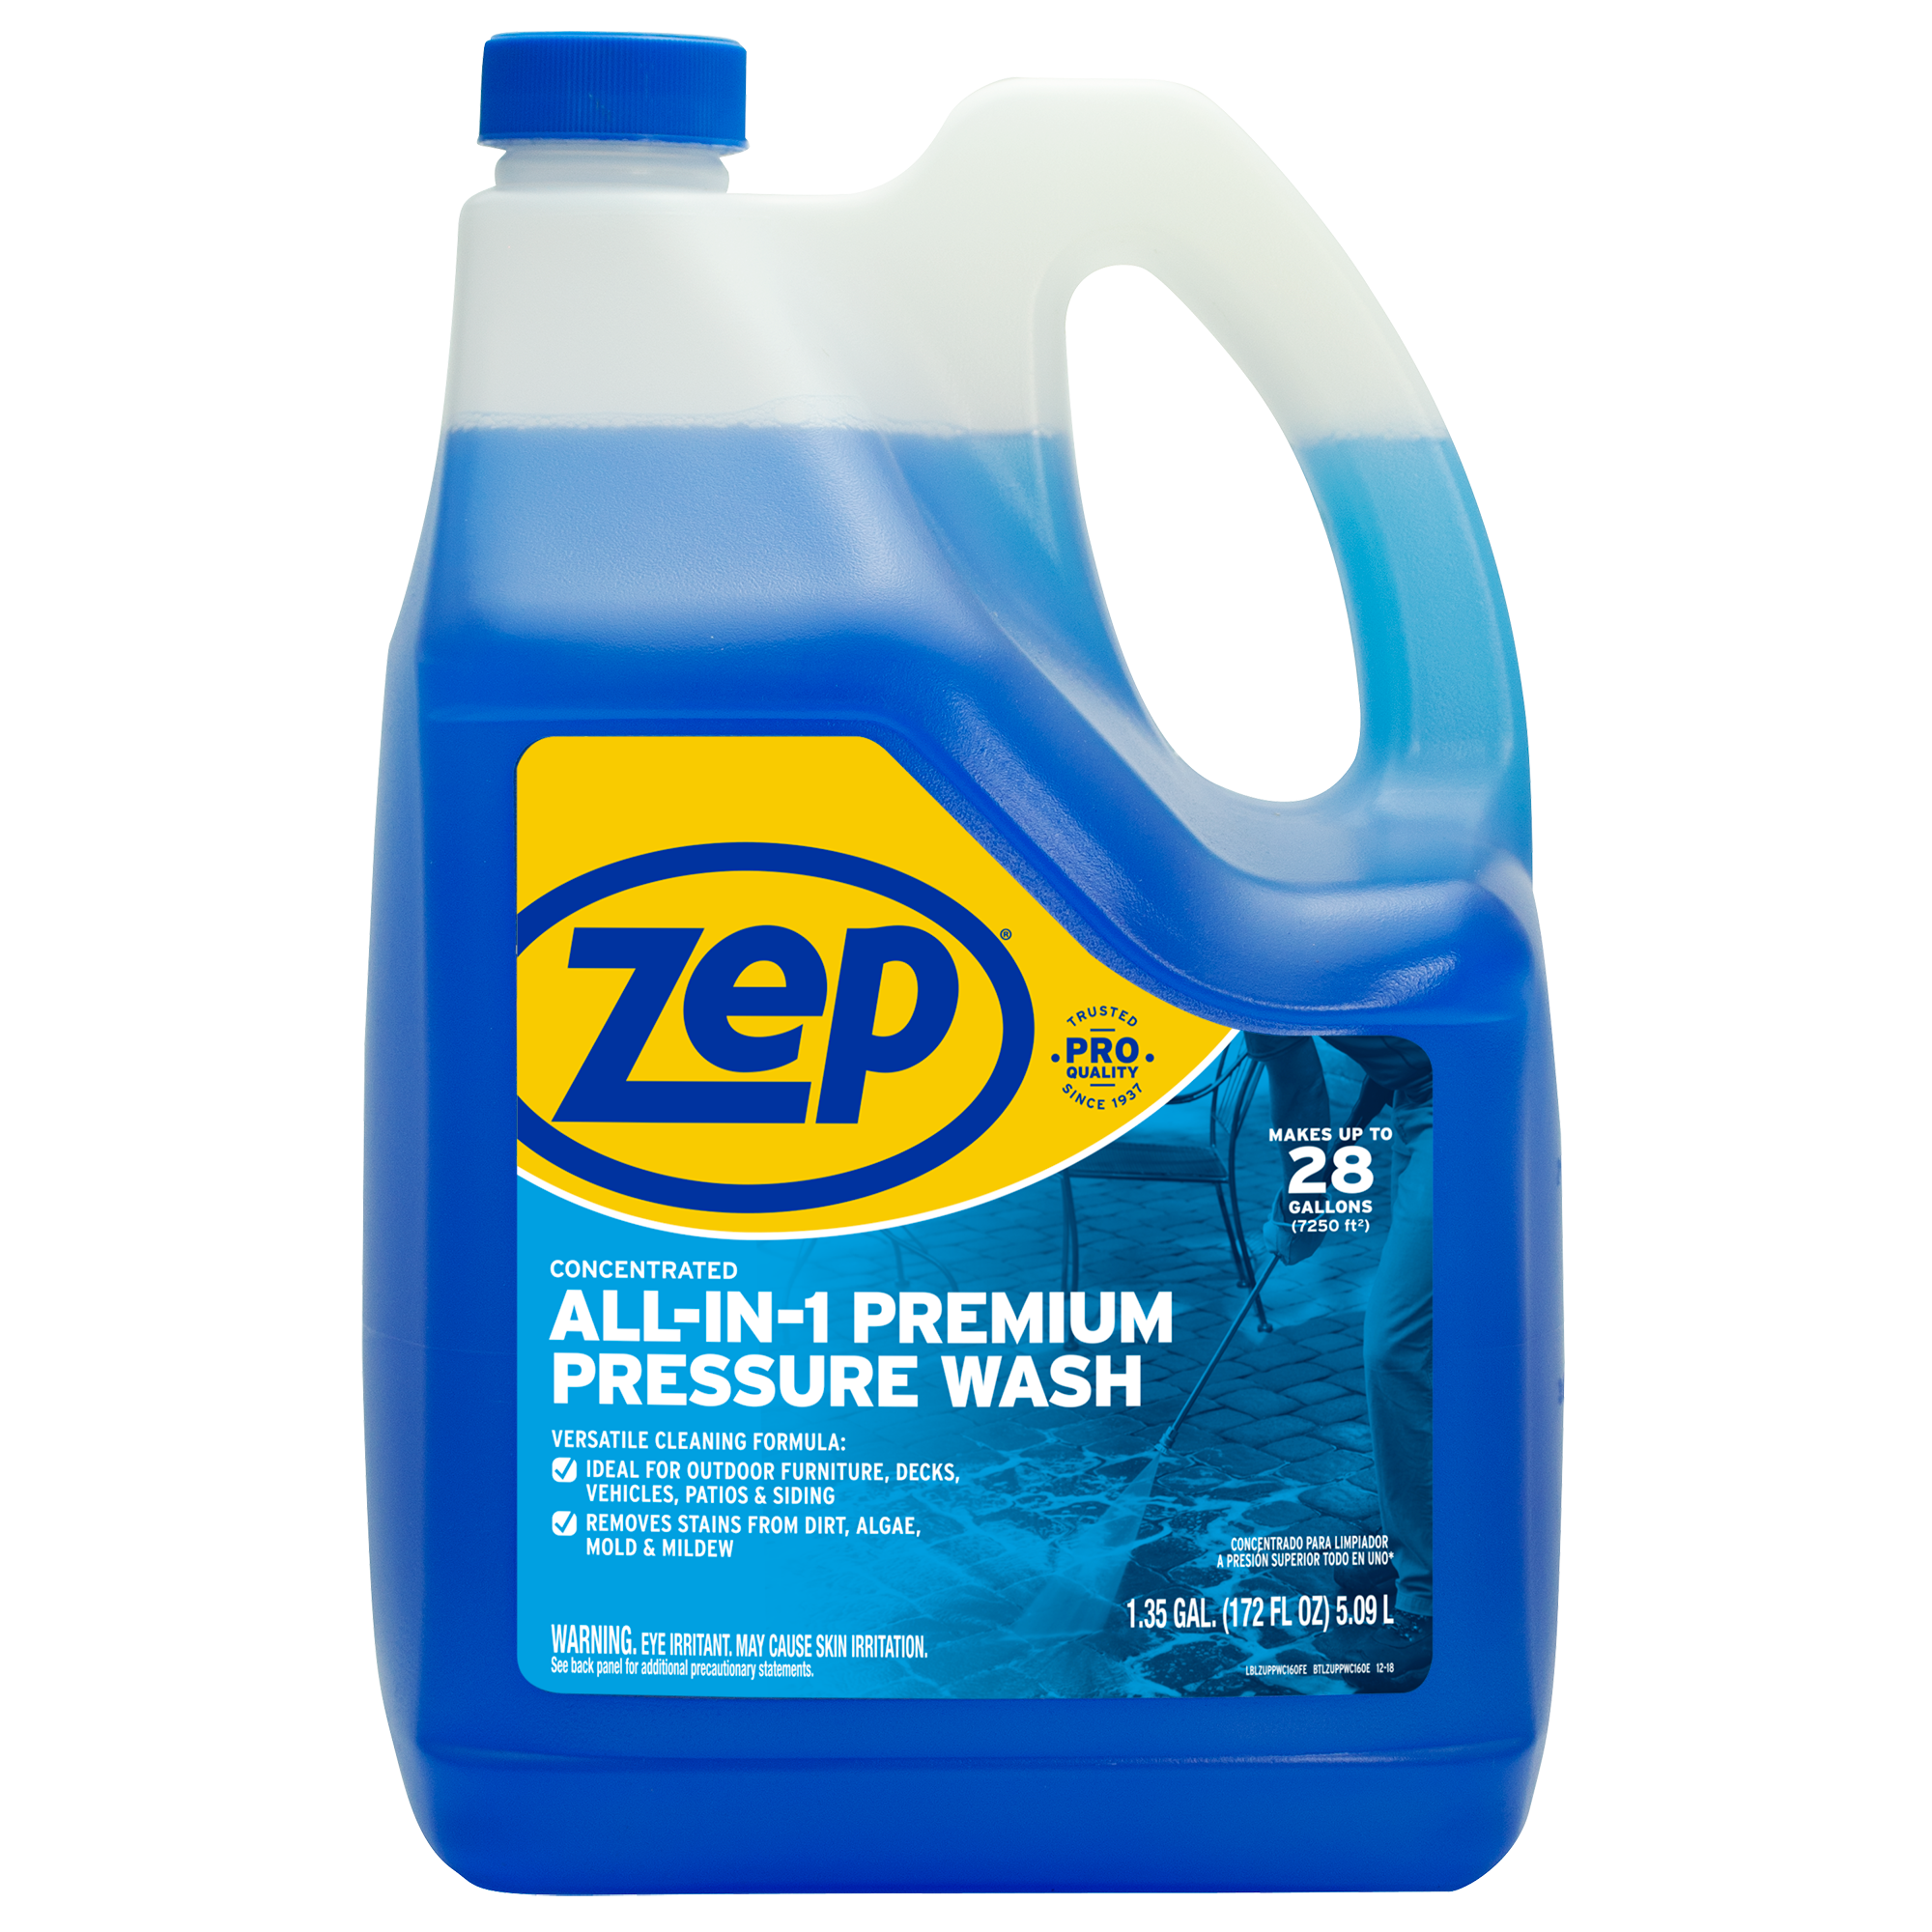 Buy Zep Products Today! – Zep Inc.